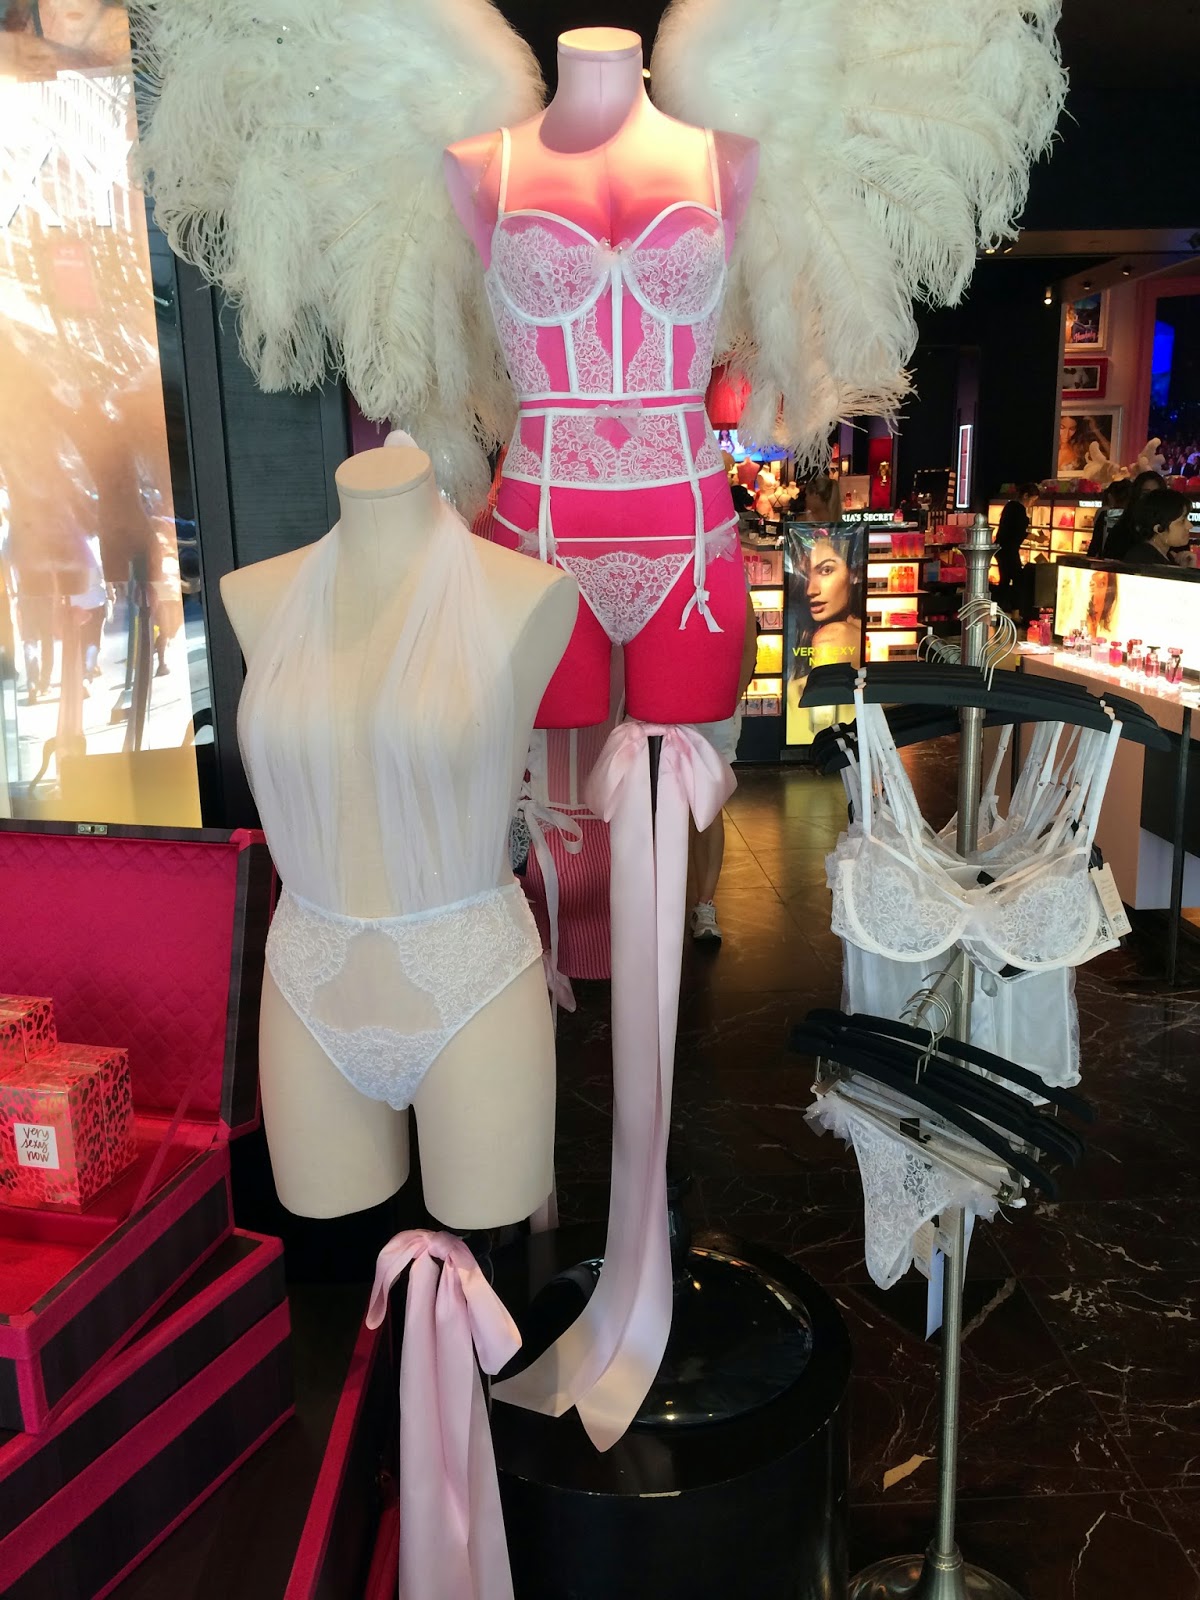 Fashion Herald: On Display: Victoria's Secret Herald Square